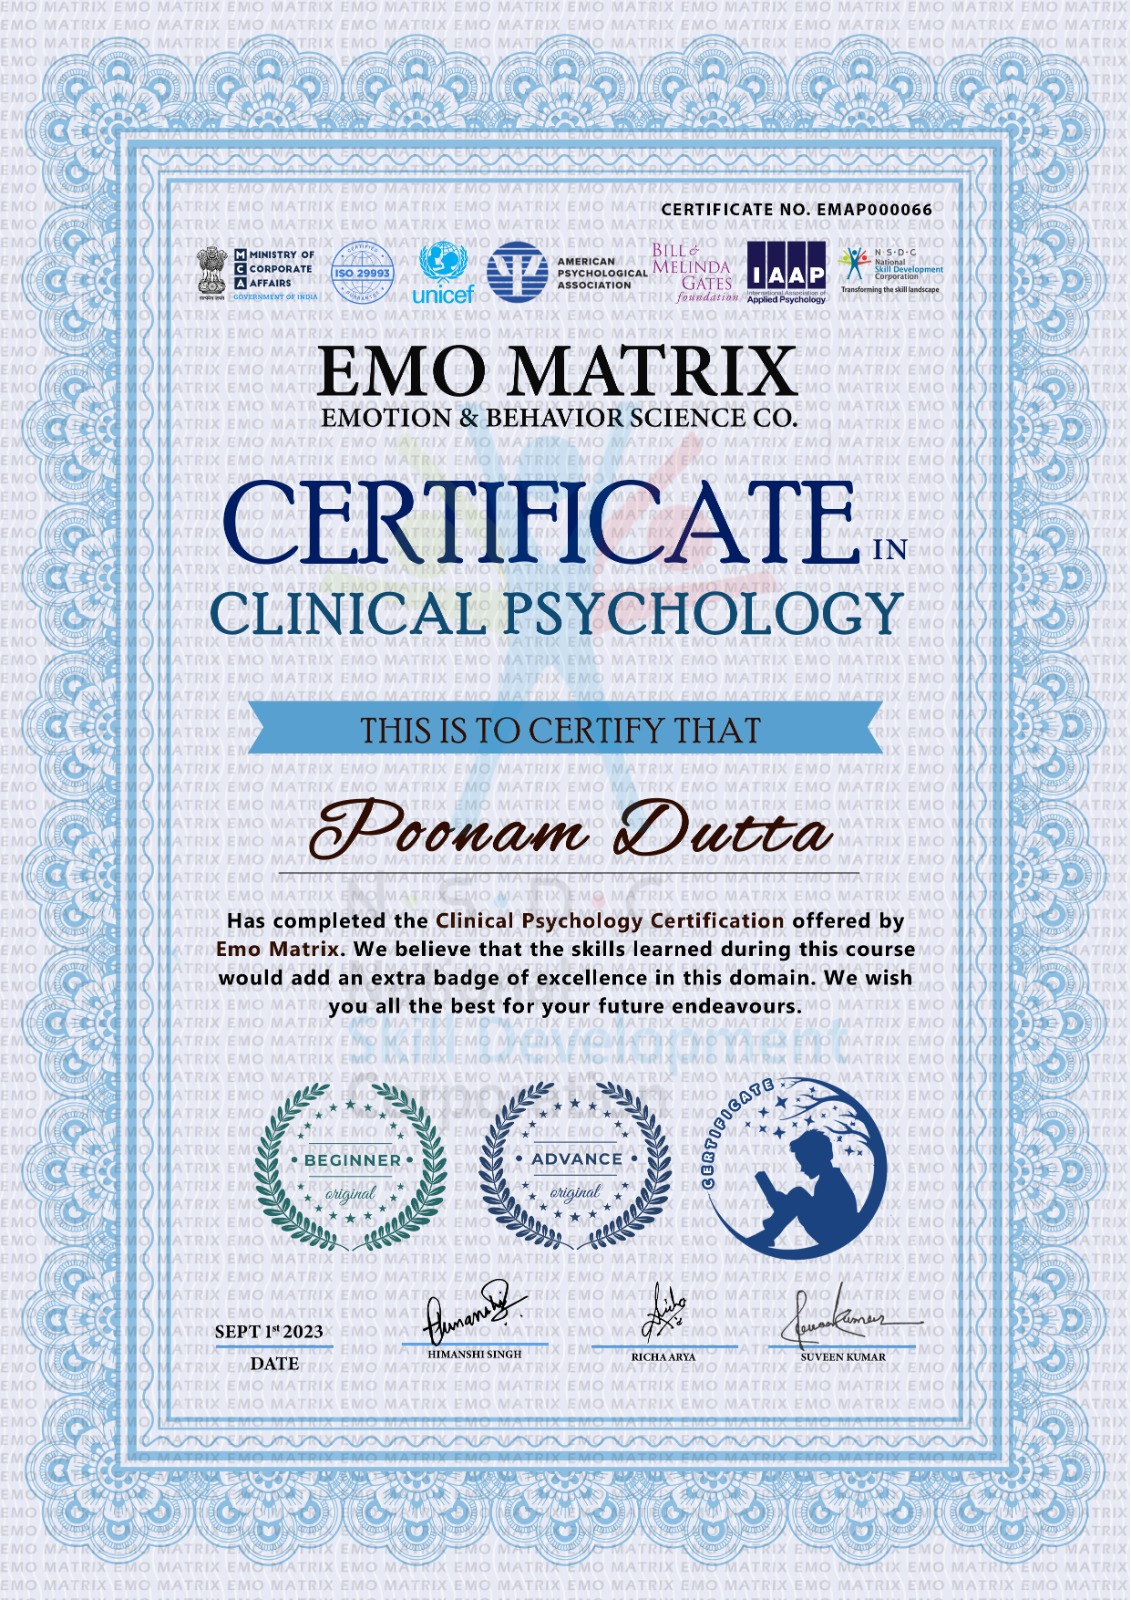 poonam dutta certificate clinical psychology